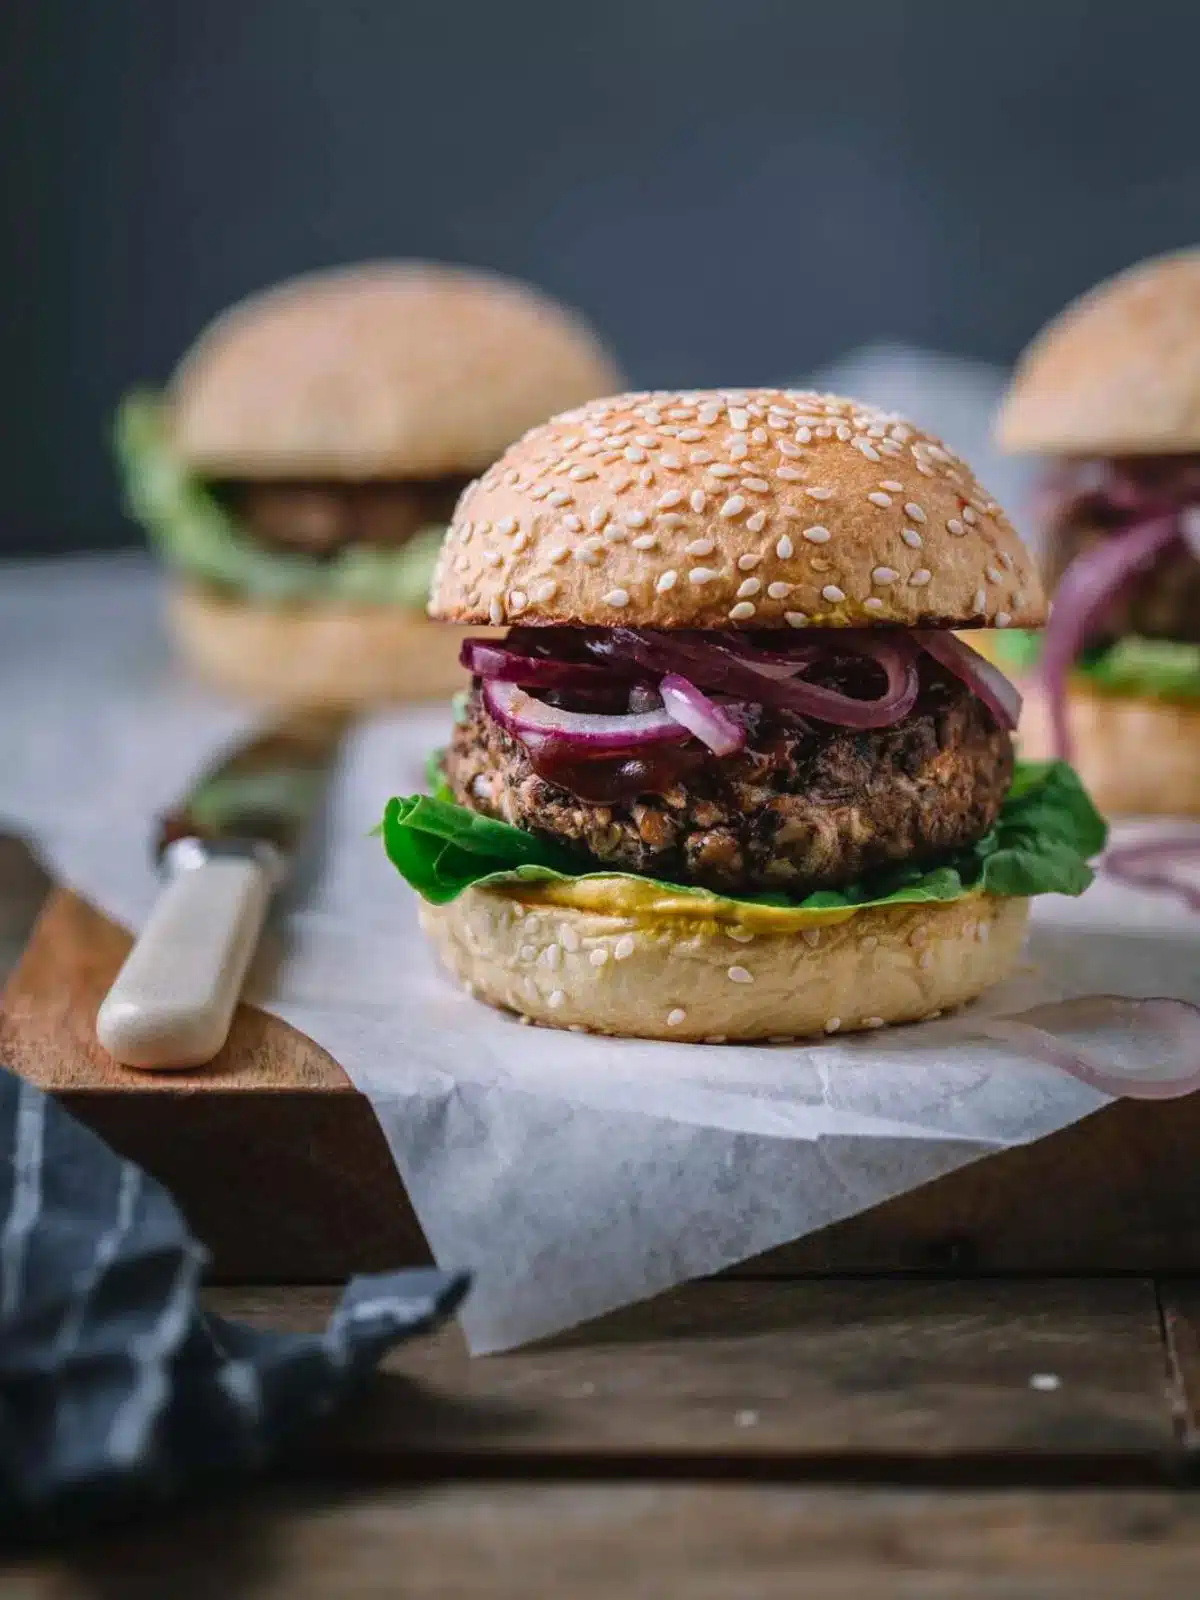 A vegan burger on a wooden board.